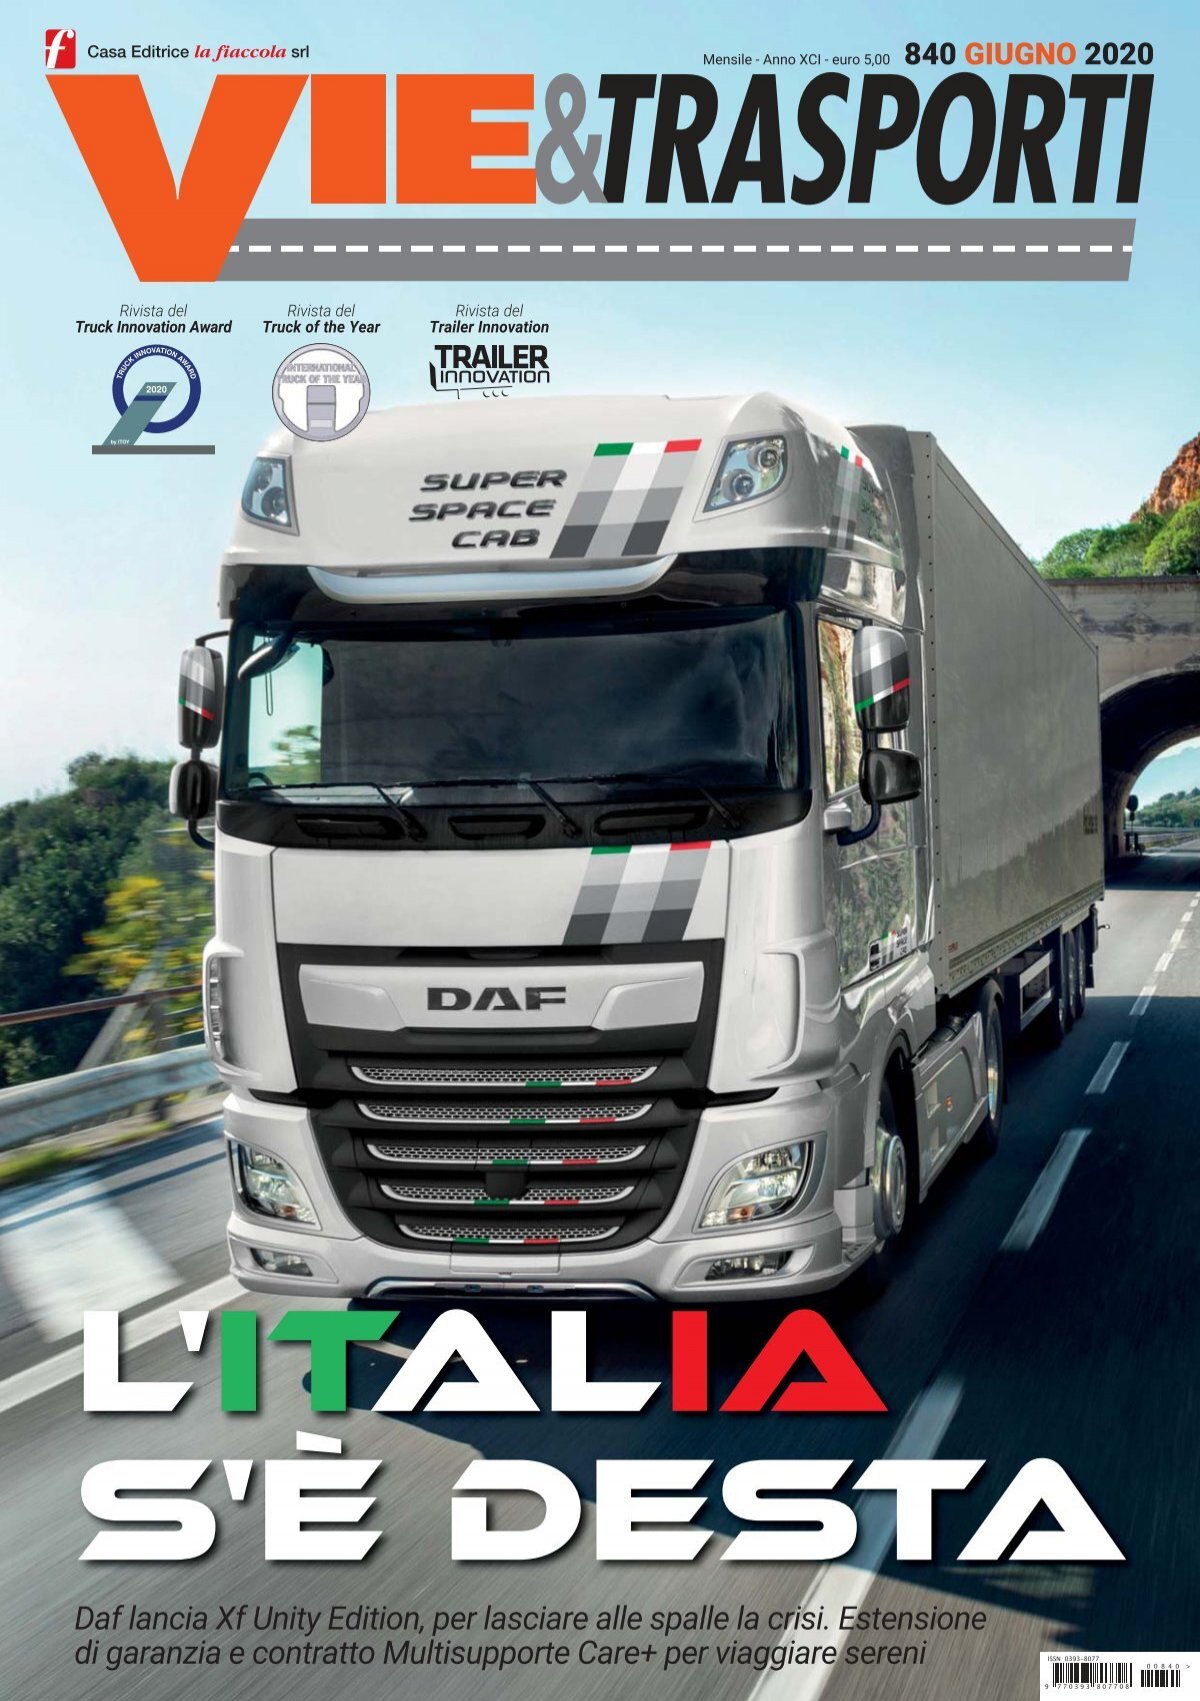 Valvole per pneumatici dei camion in vendita online - Würth Italia